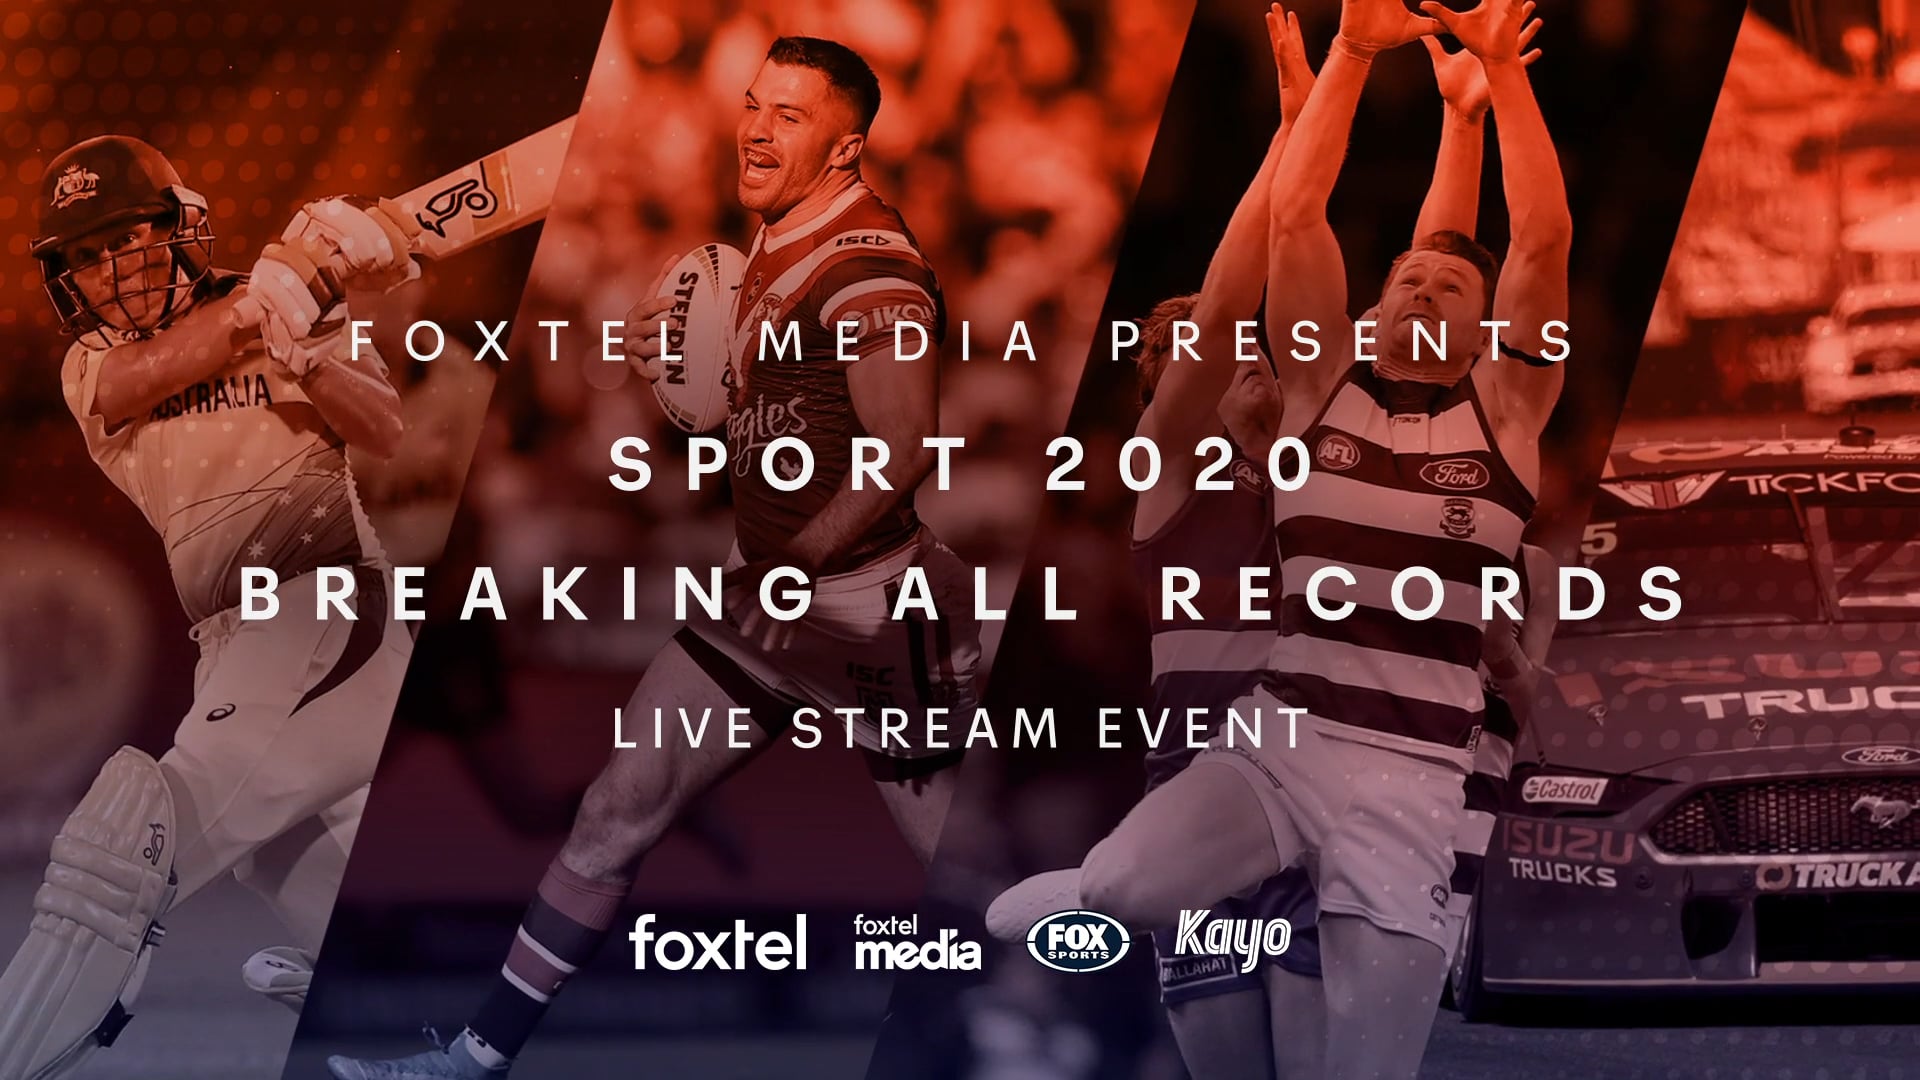 Foxtel Media presents Sport 2020 Breaking All Records